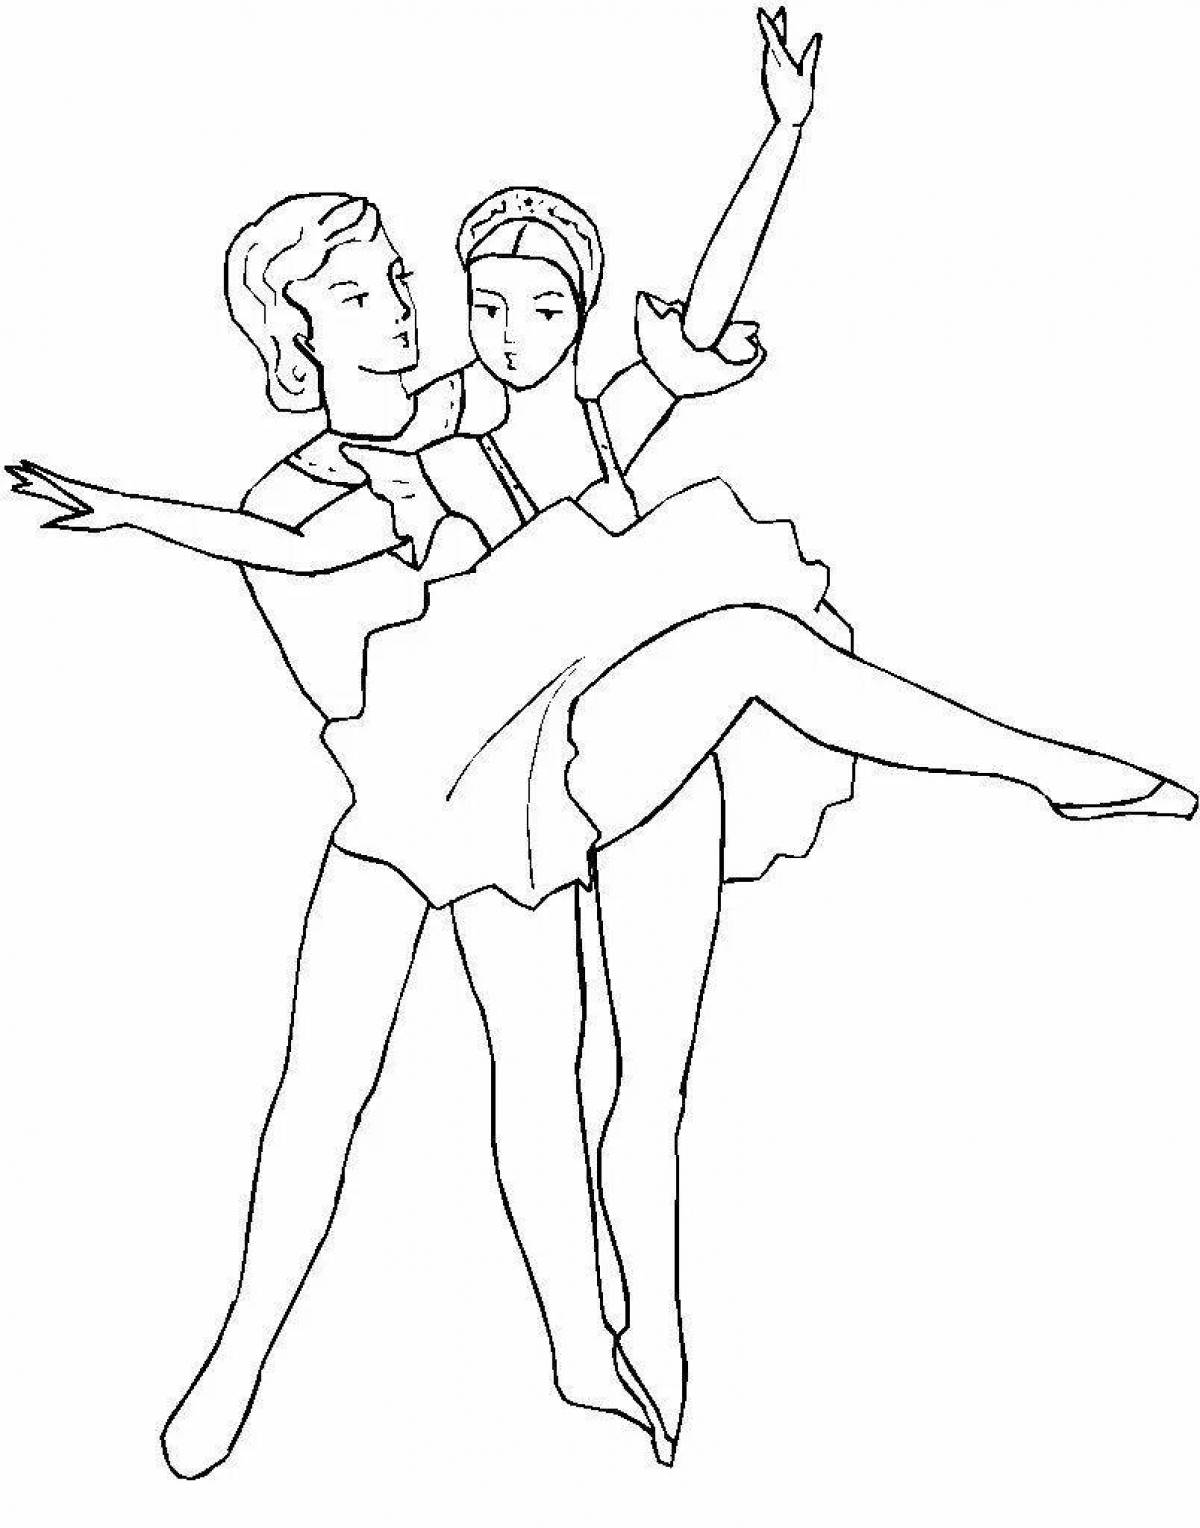 Beautiful drawing of a ballerina